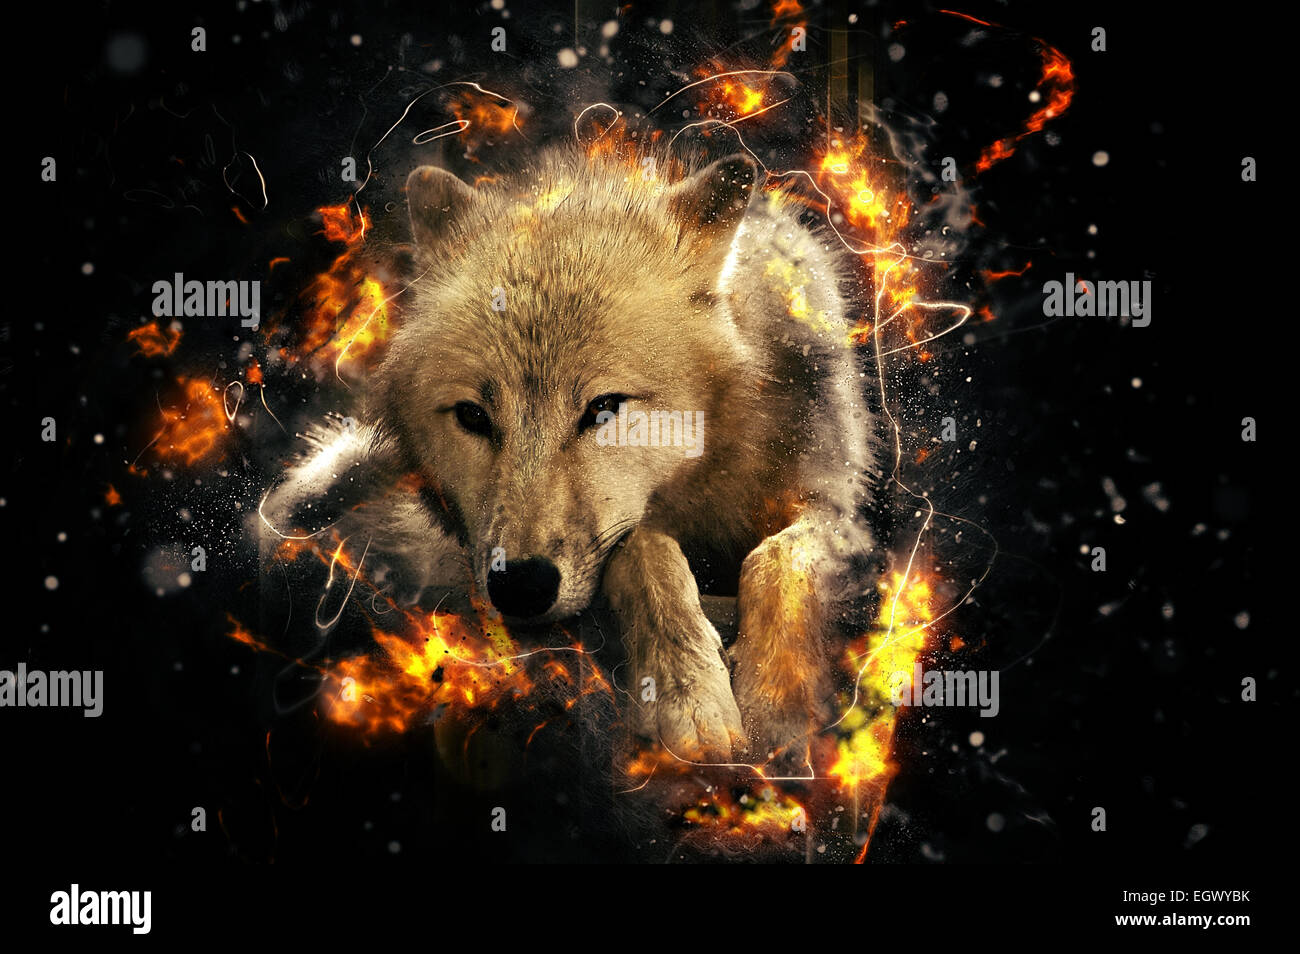 White wolf, fire illustration Stock Photo